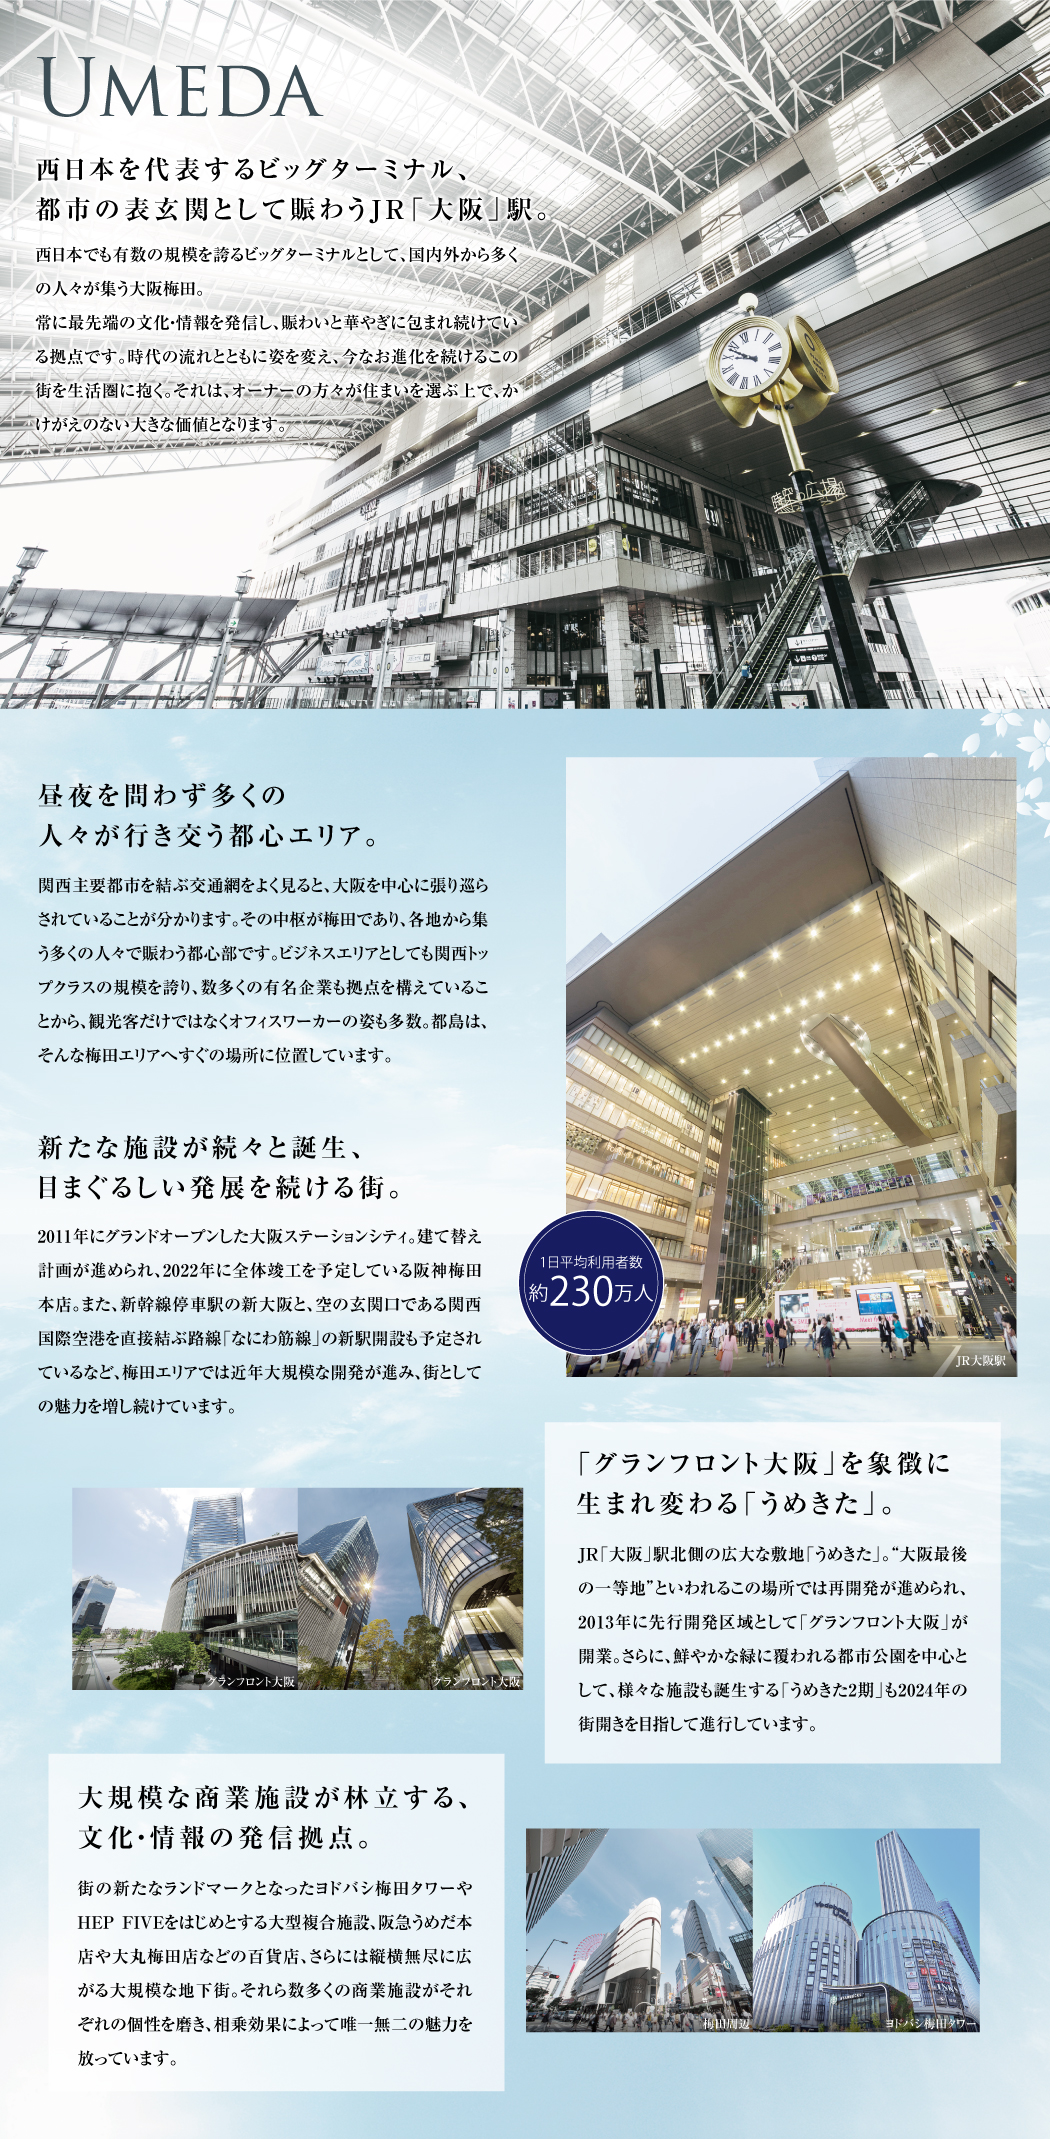 UMEDA,西日本を代表するビッグターミナル、都市の表玄関として賑わうJR「大阪」駅。